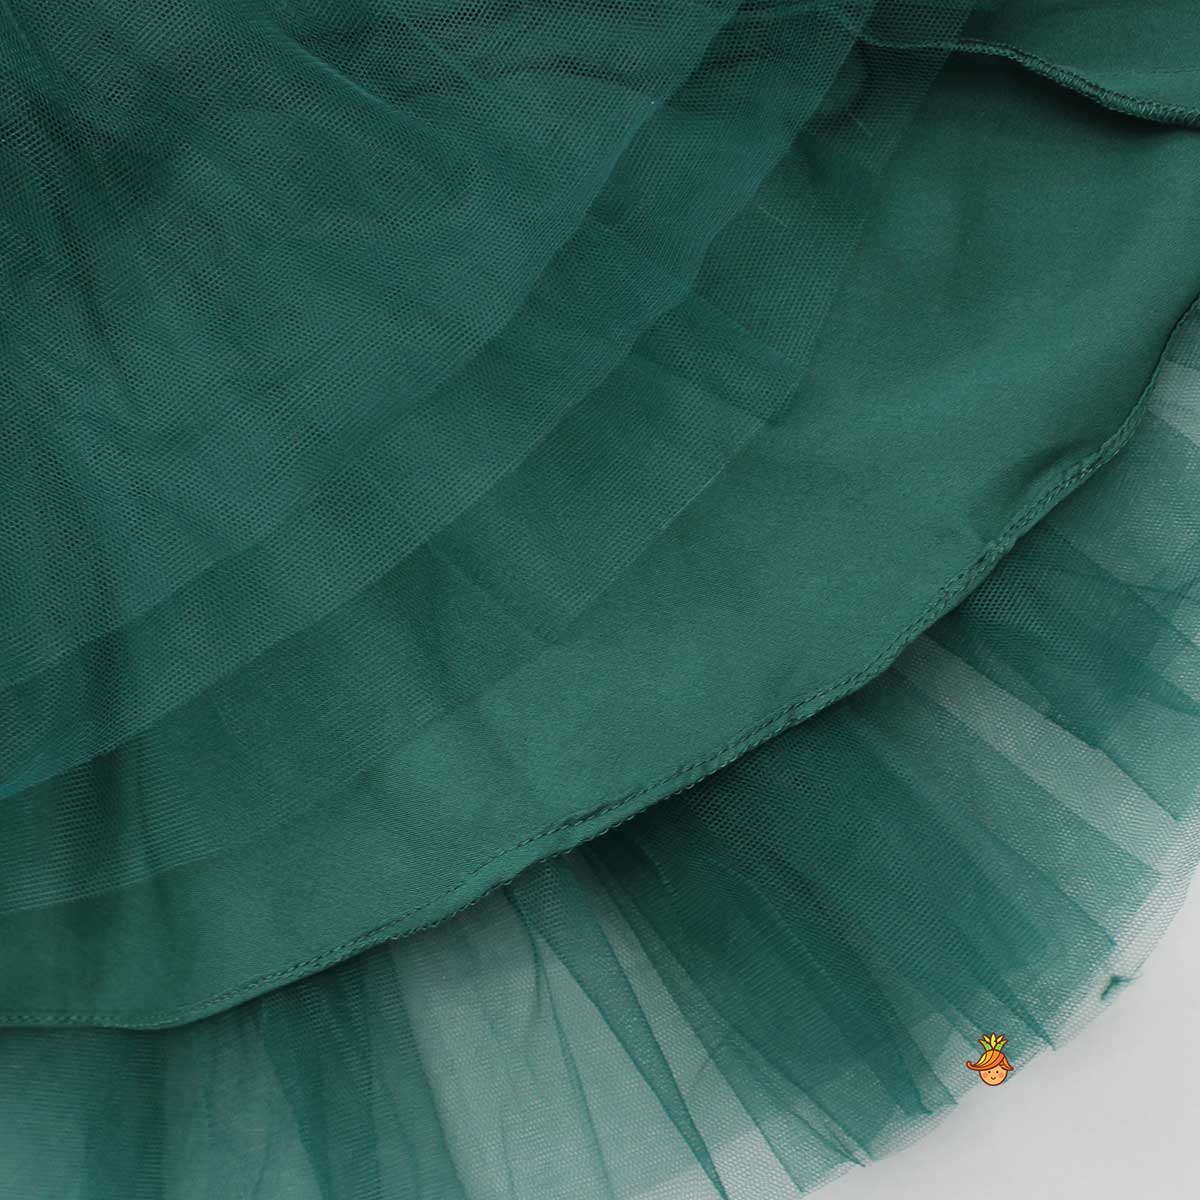 Charming Green Ruffled One Shoulder Dress